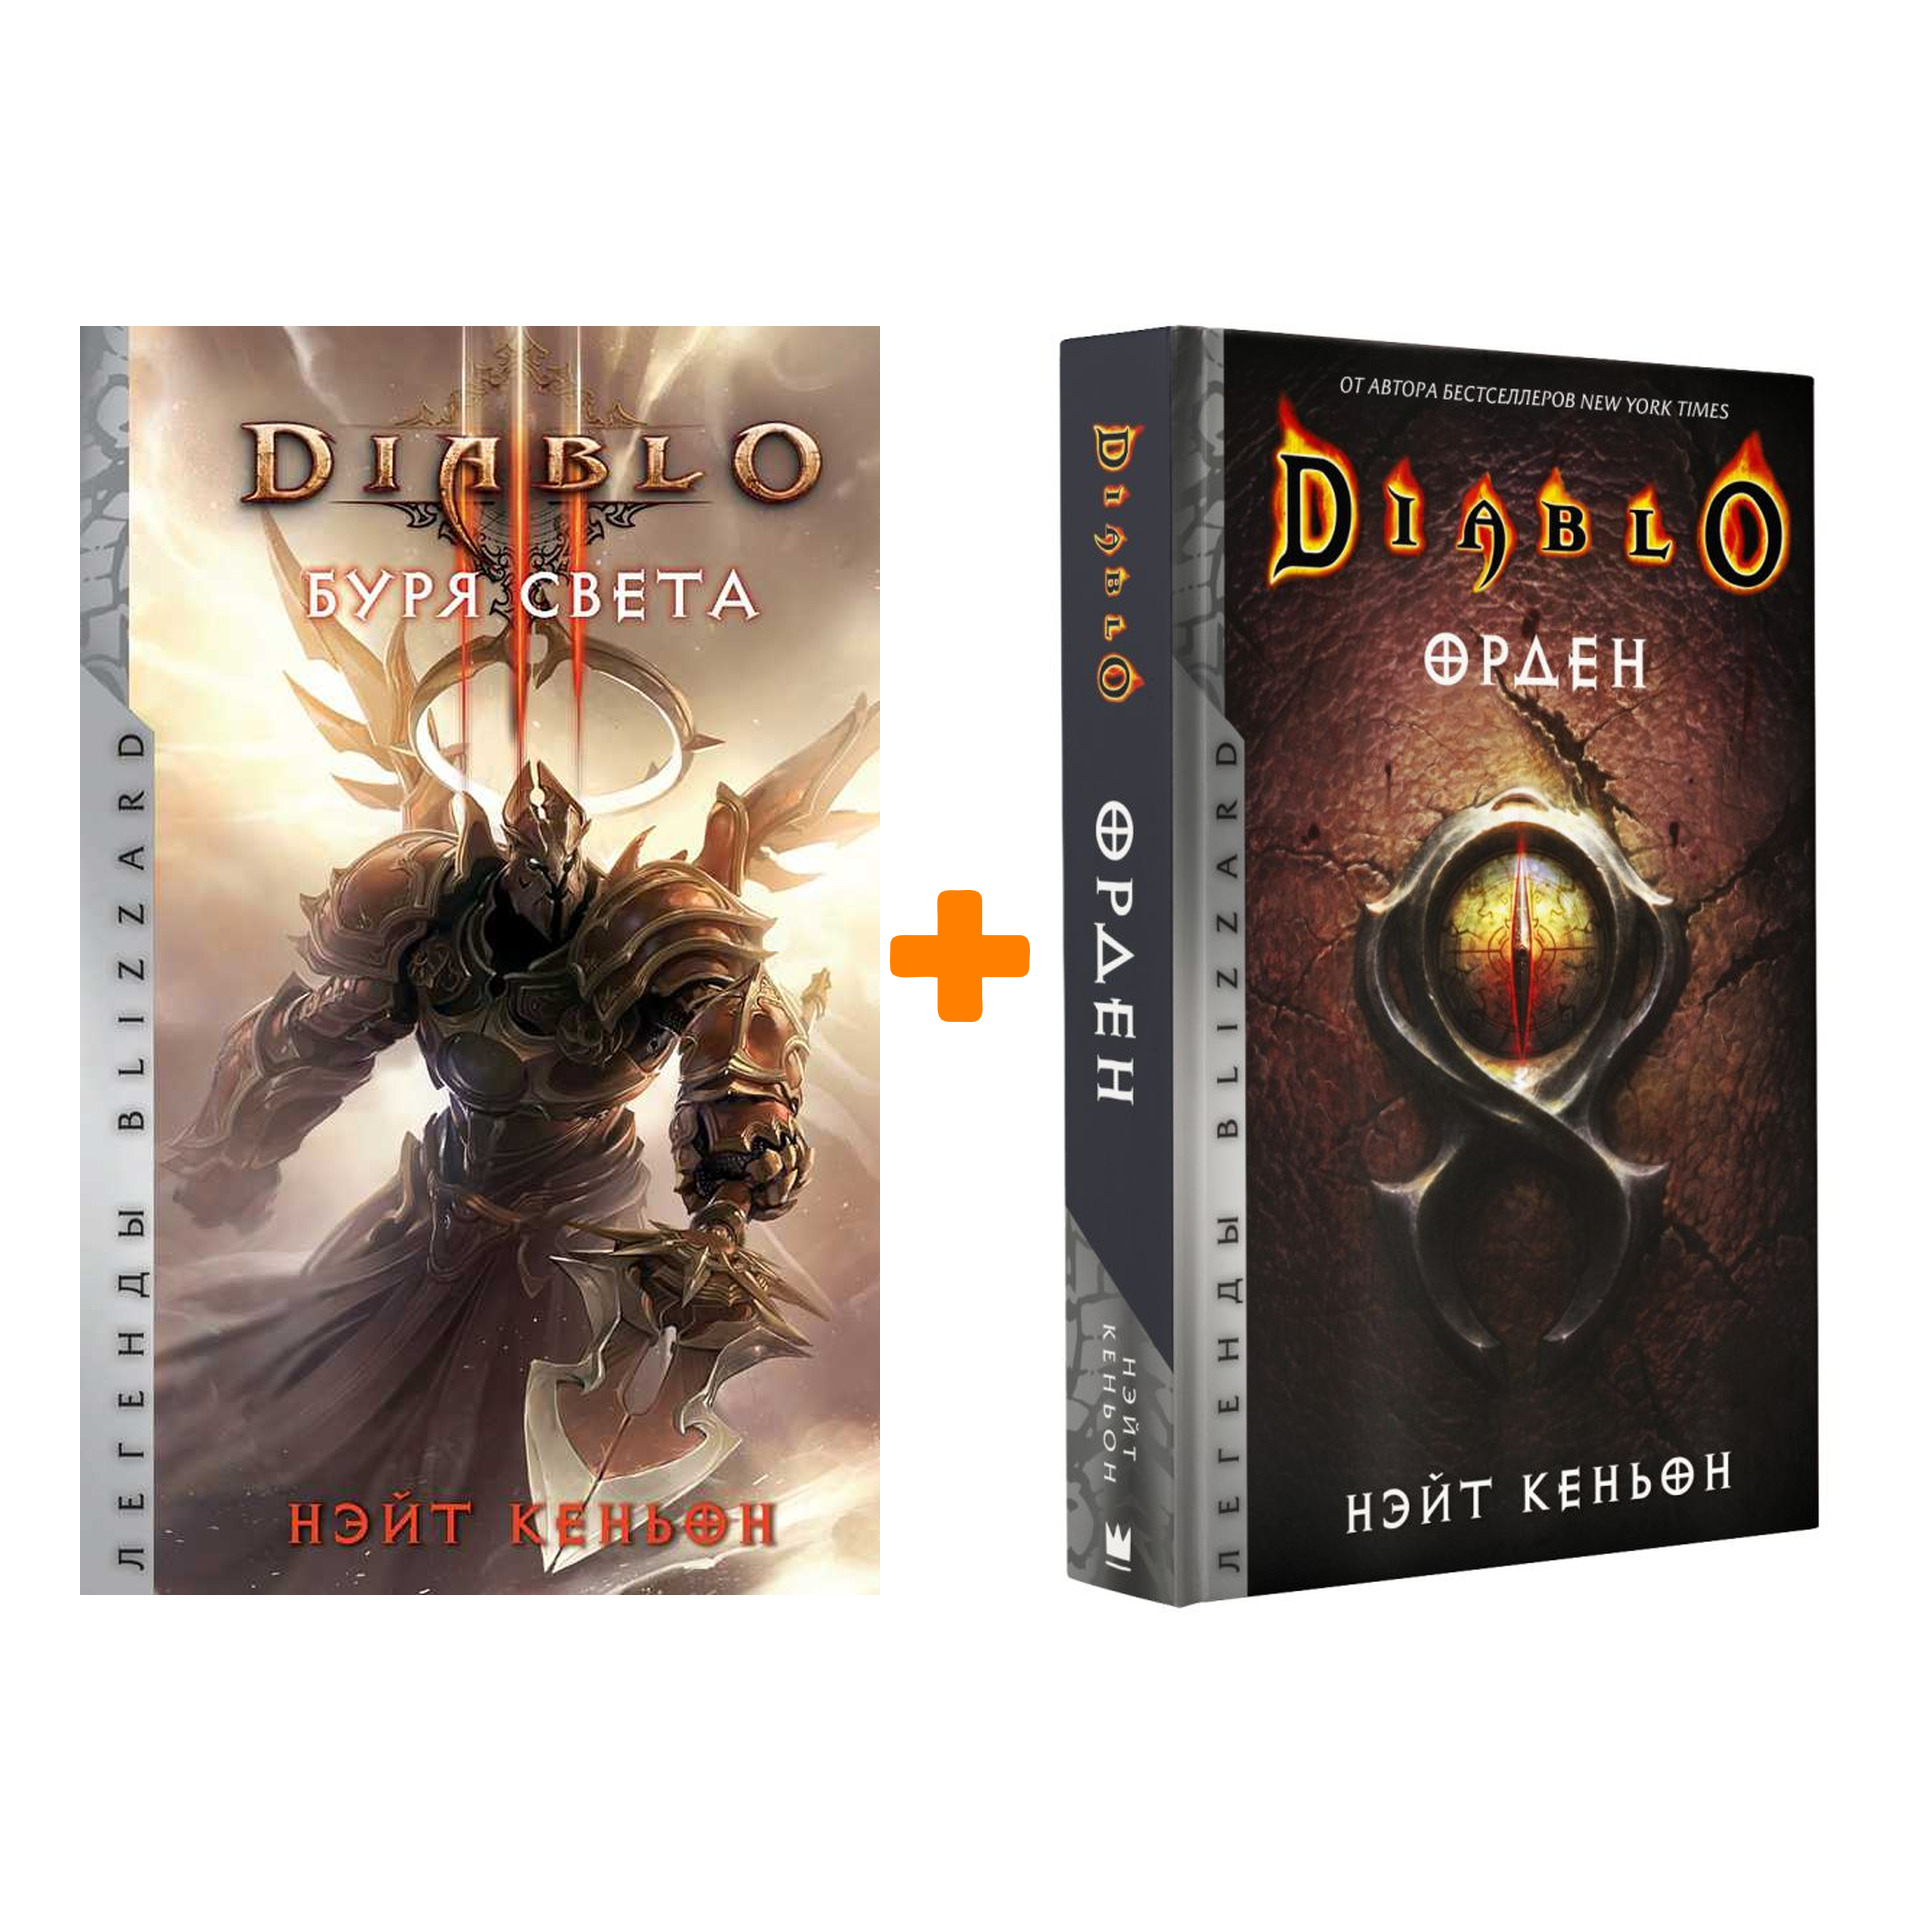 Diablo: Орден + Буря света – Легенды Blizzard. Комплект книг